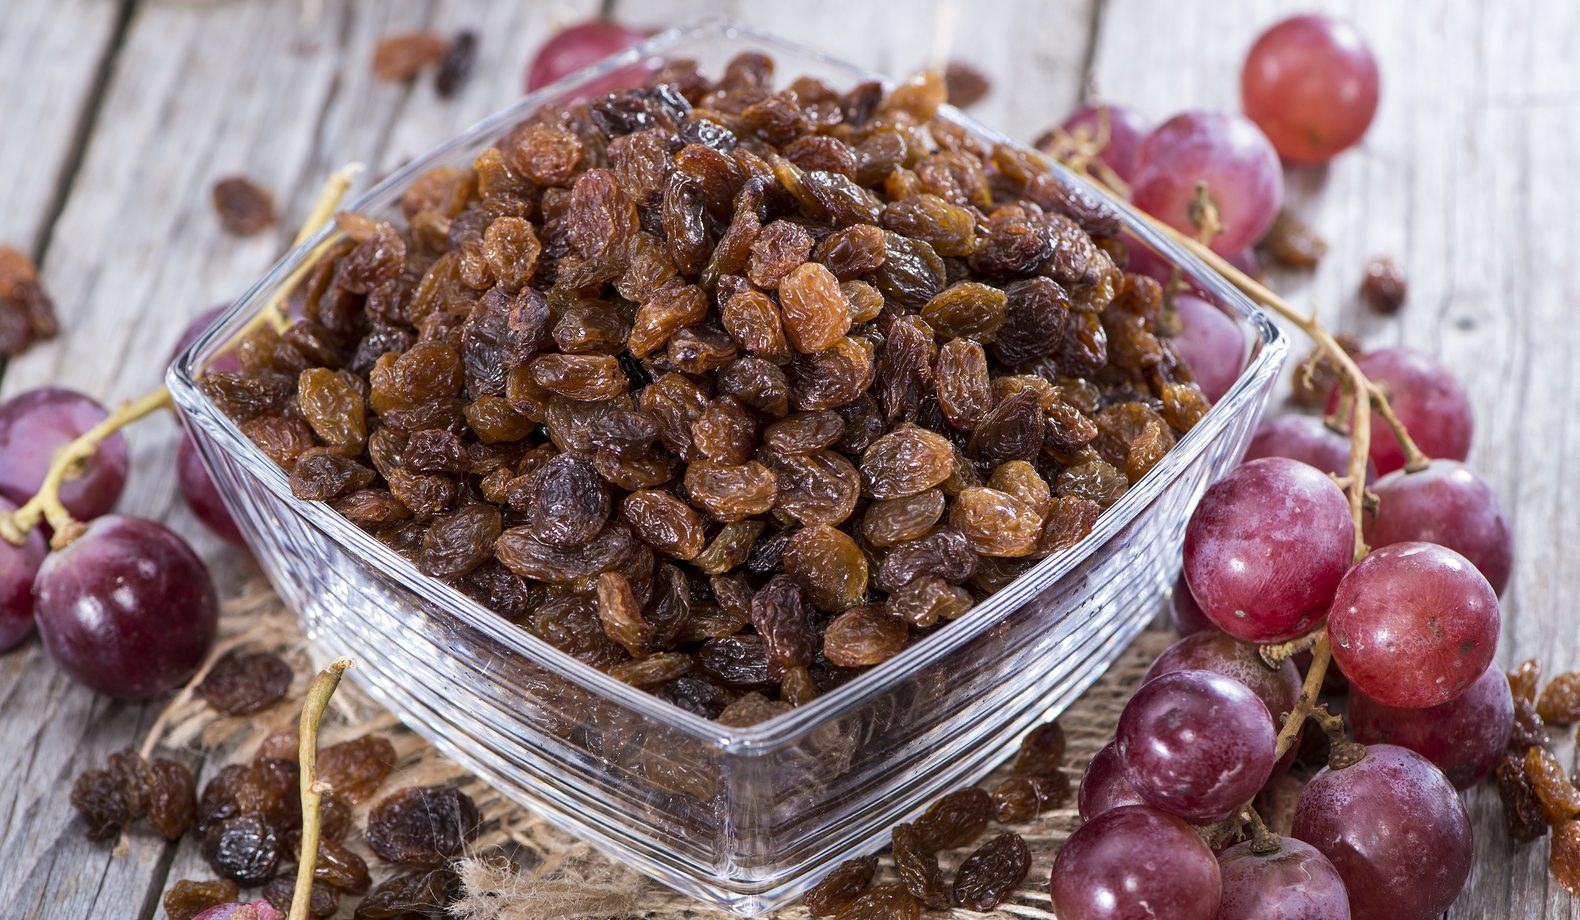  what is brown raisins + purchase price of brown raisins 